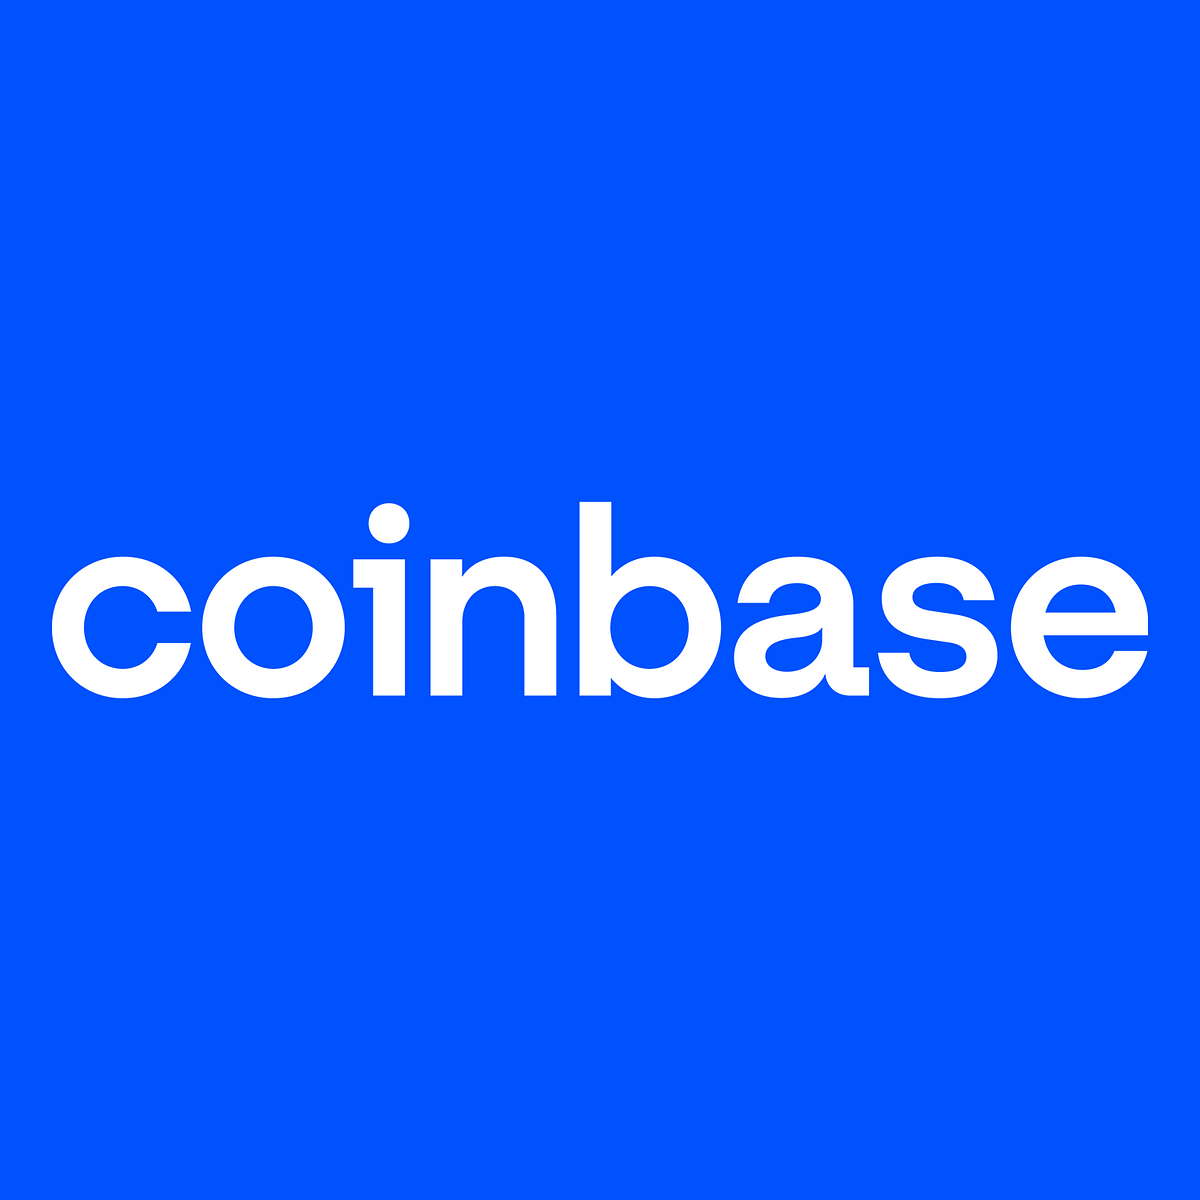 coinbase logotipas png